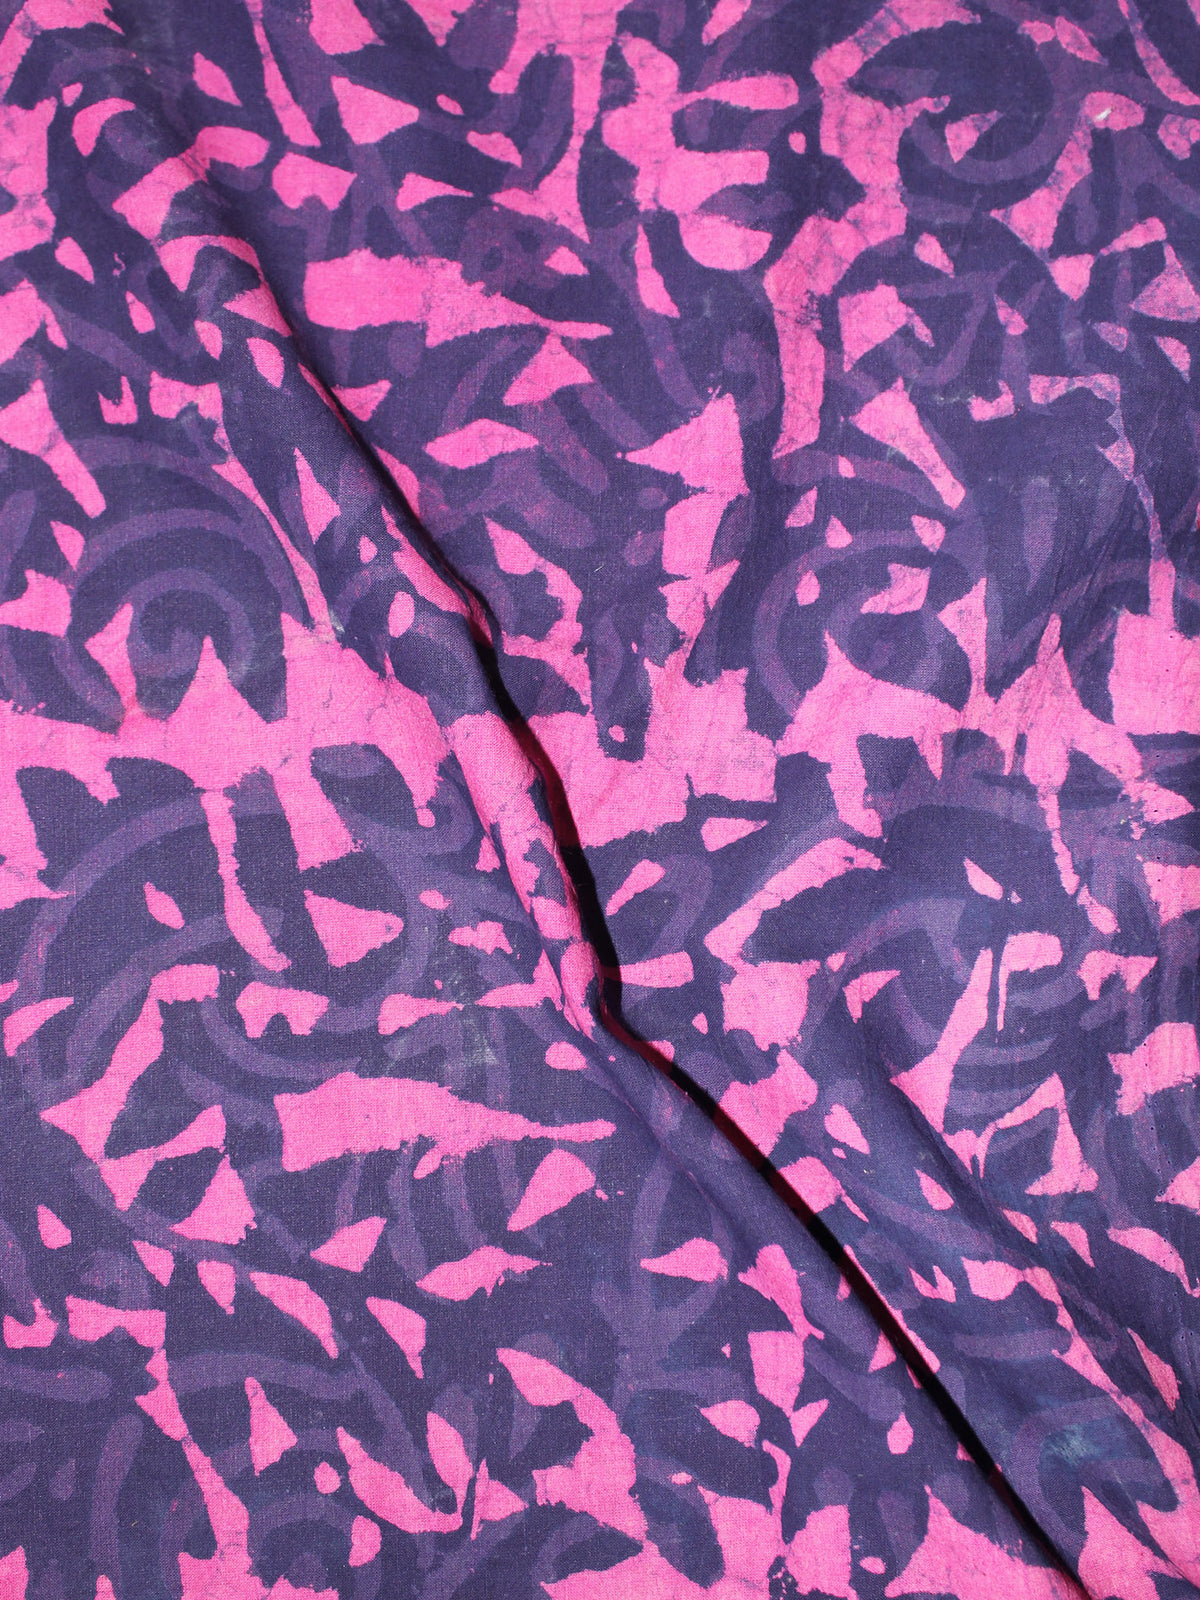 Pink Indigo Hand Block Printed Cotton Cambric Fabric Per Meter - F0916466